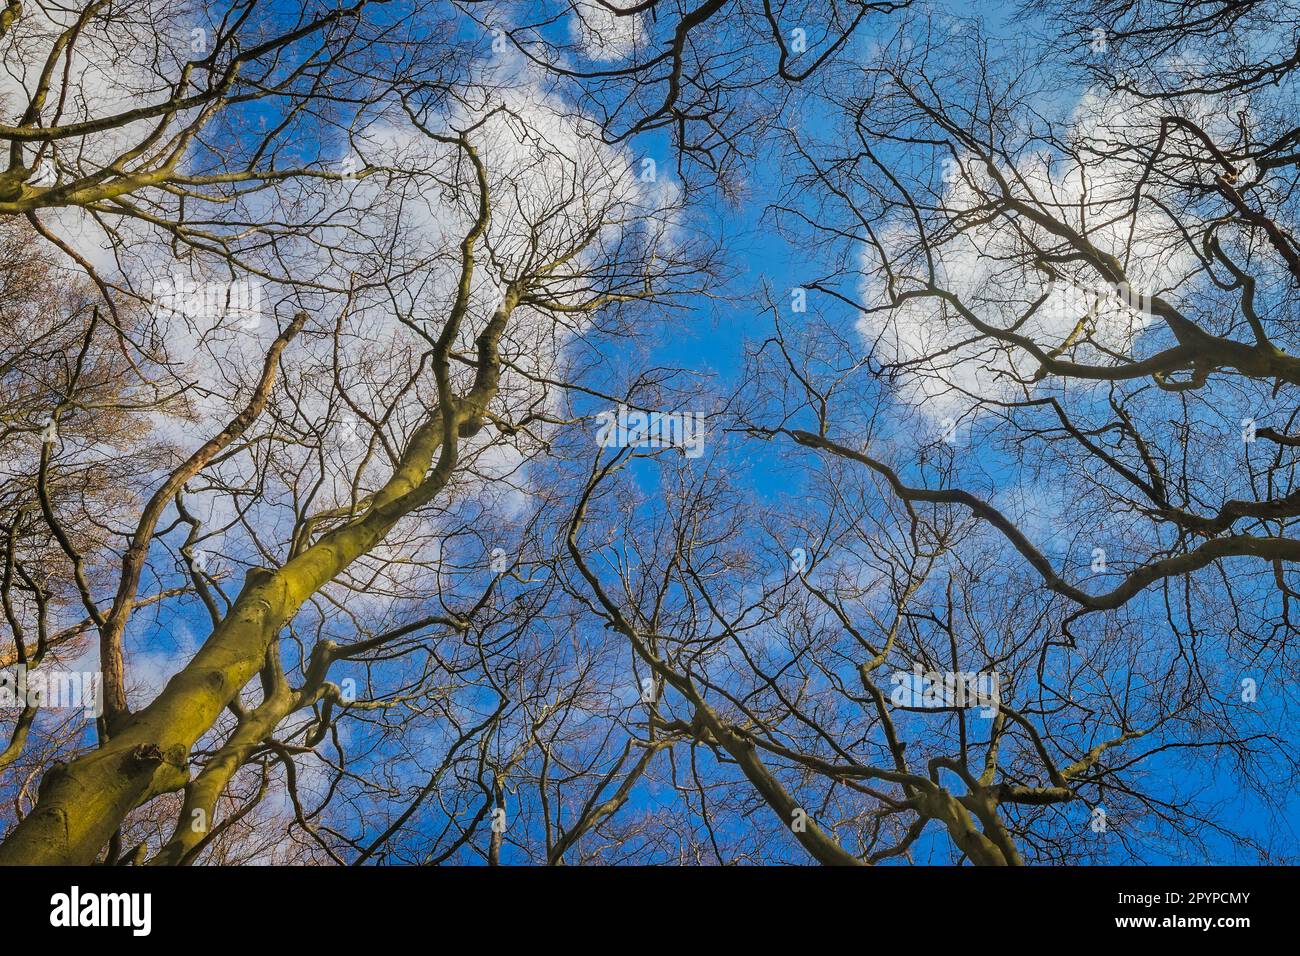 Looking skywards in Hampstead Heath, London Stock Photo